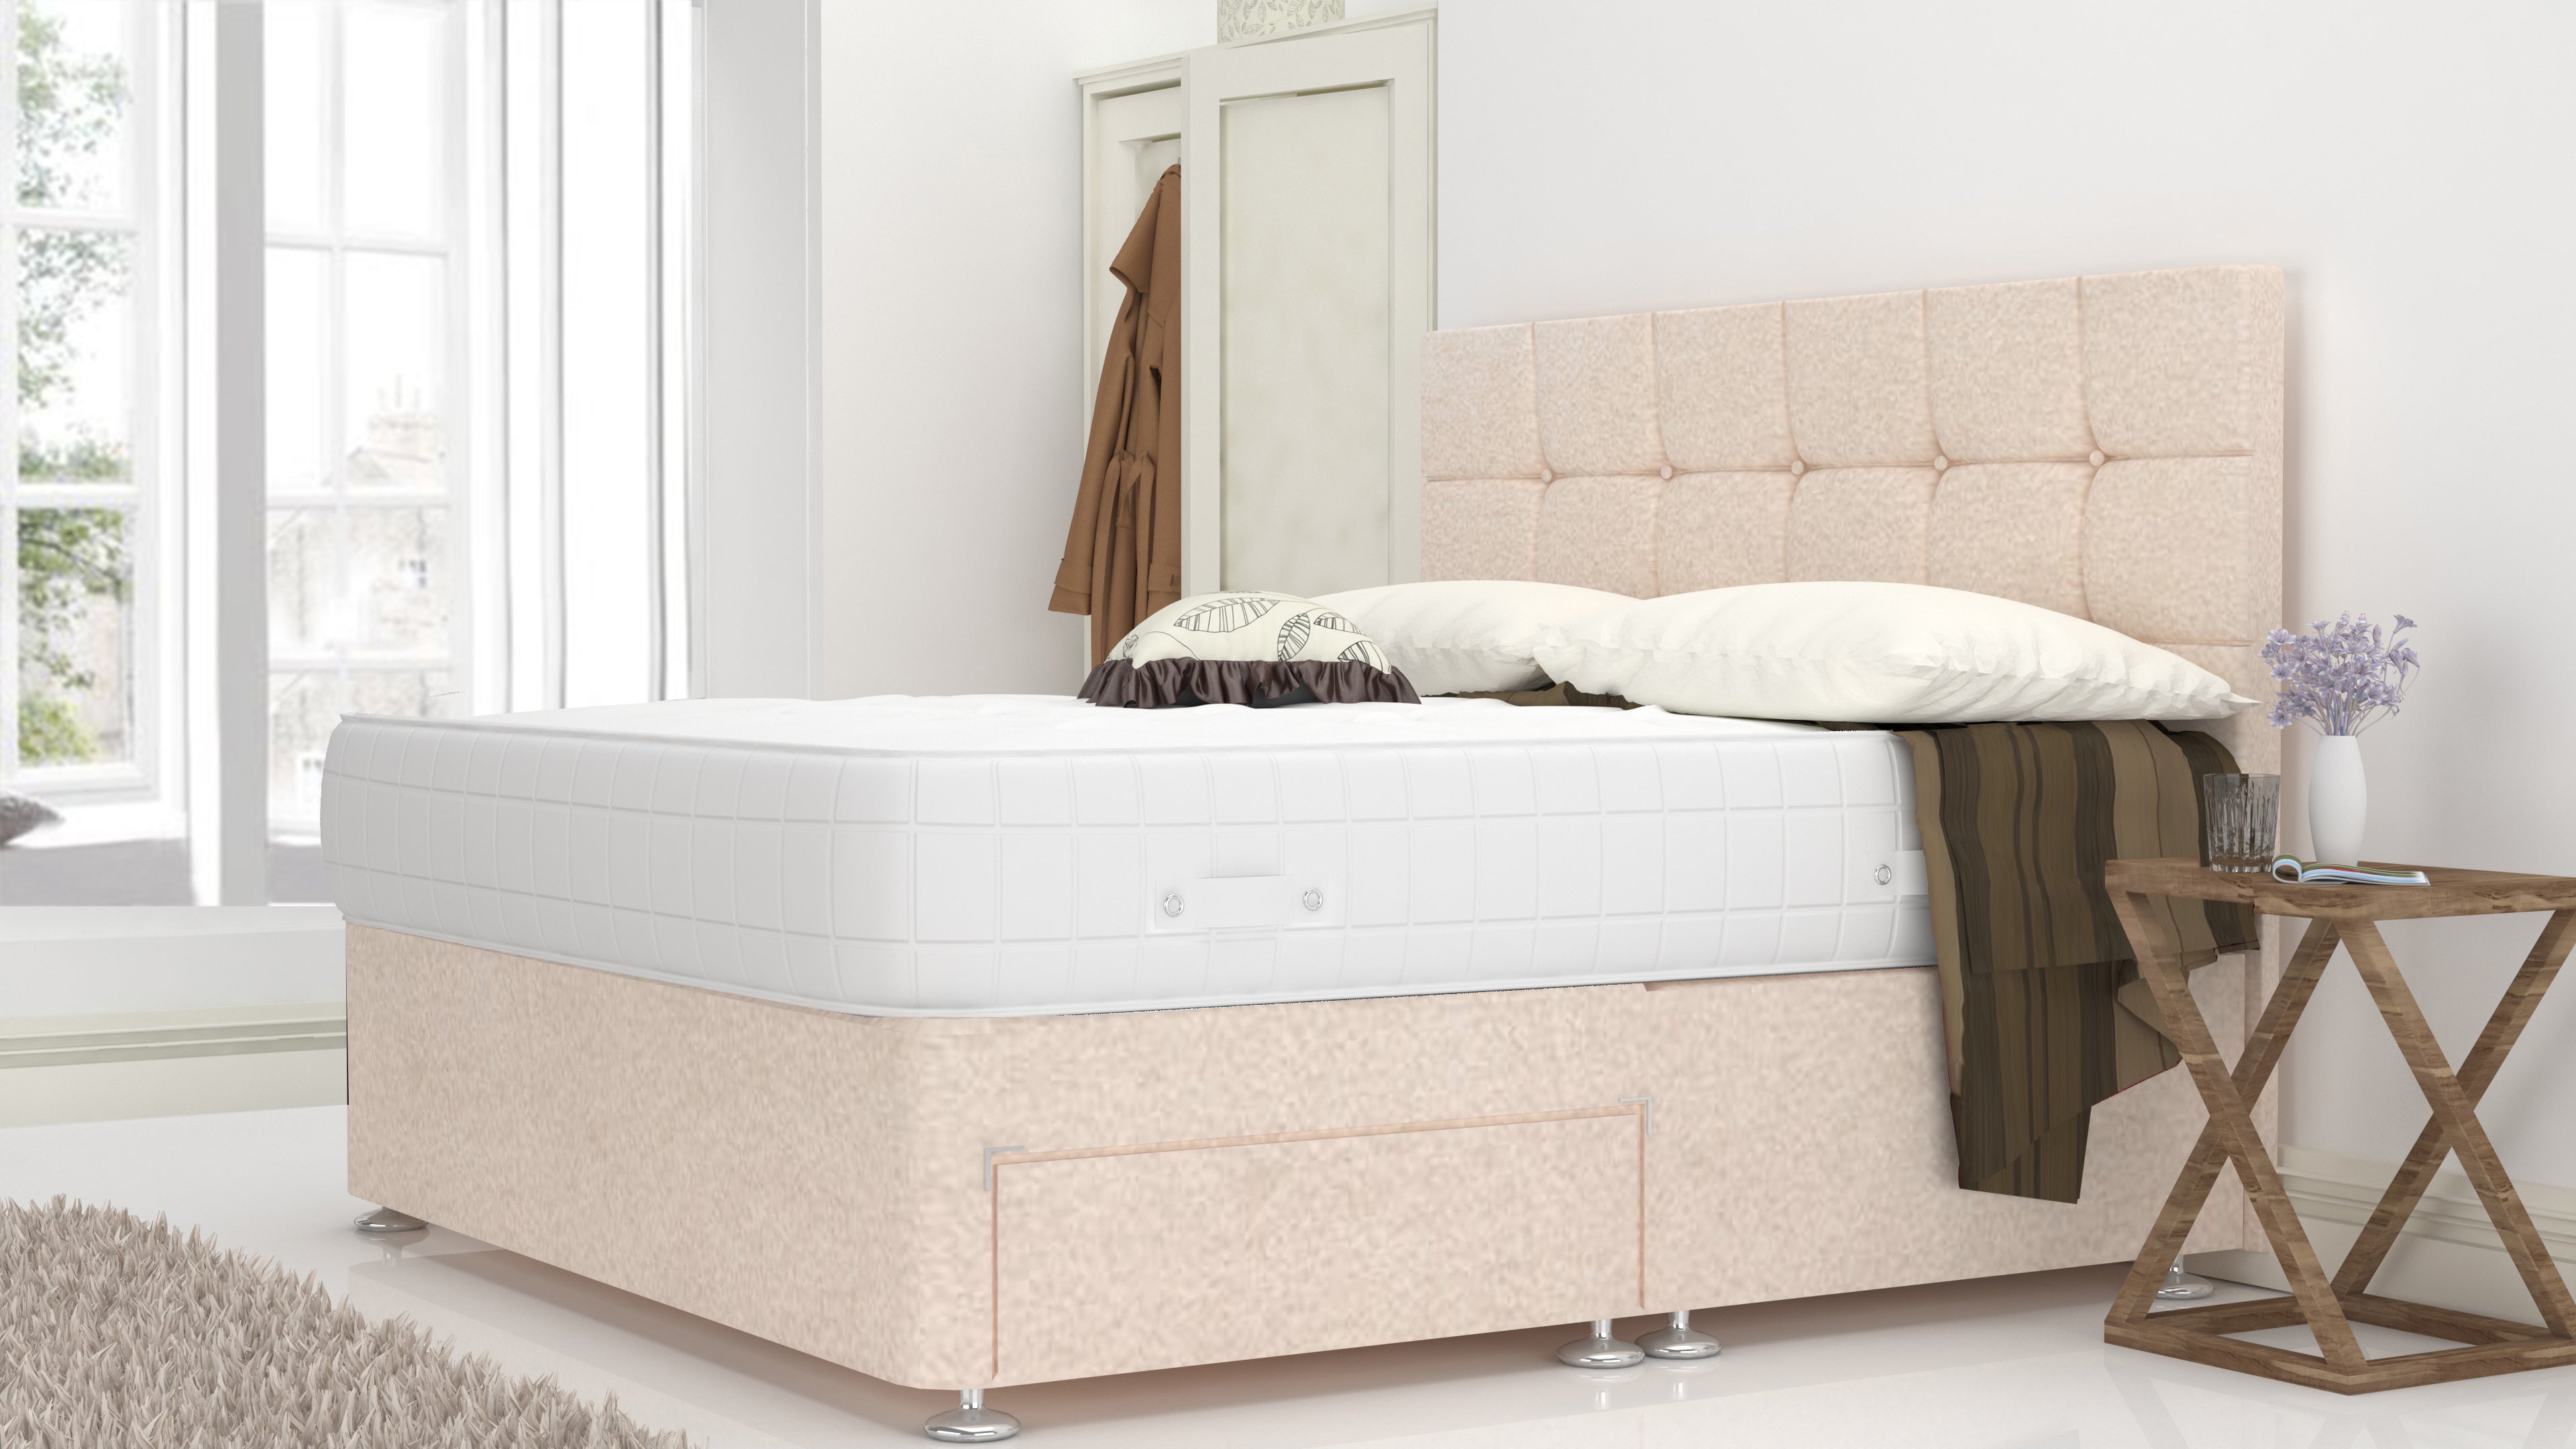 Cream Chanille Divan Bed Set With Orthopedic Mattress